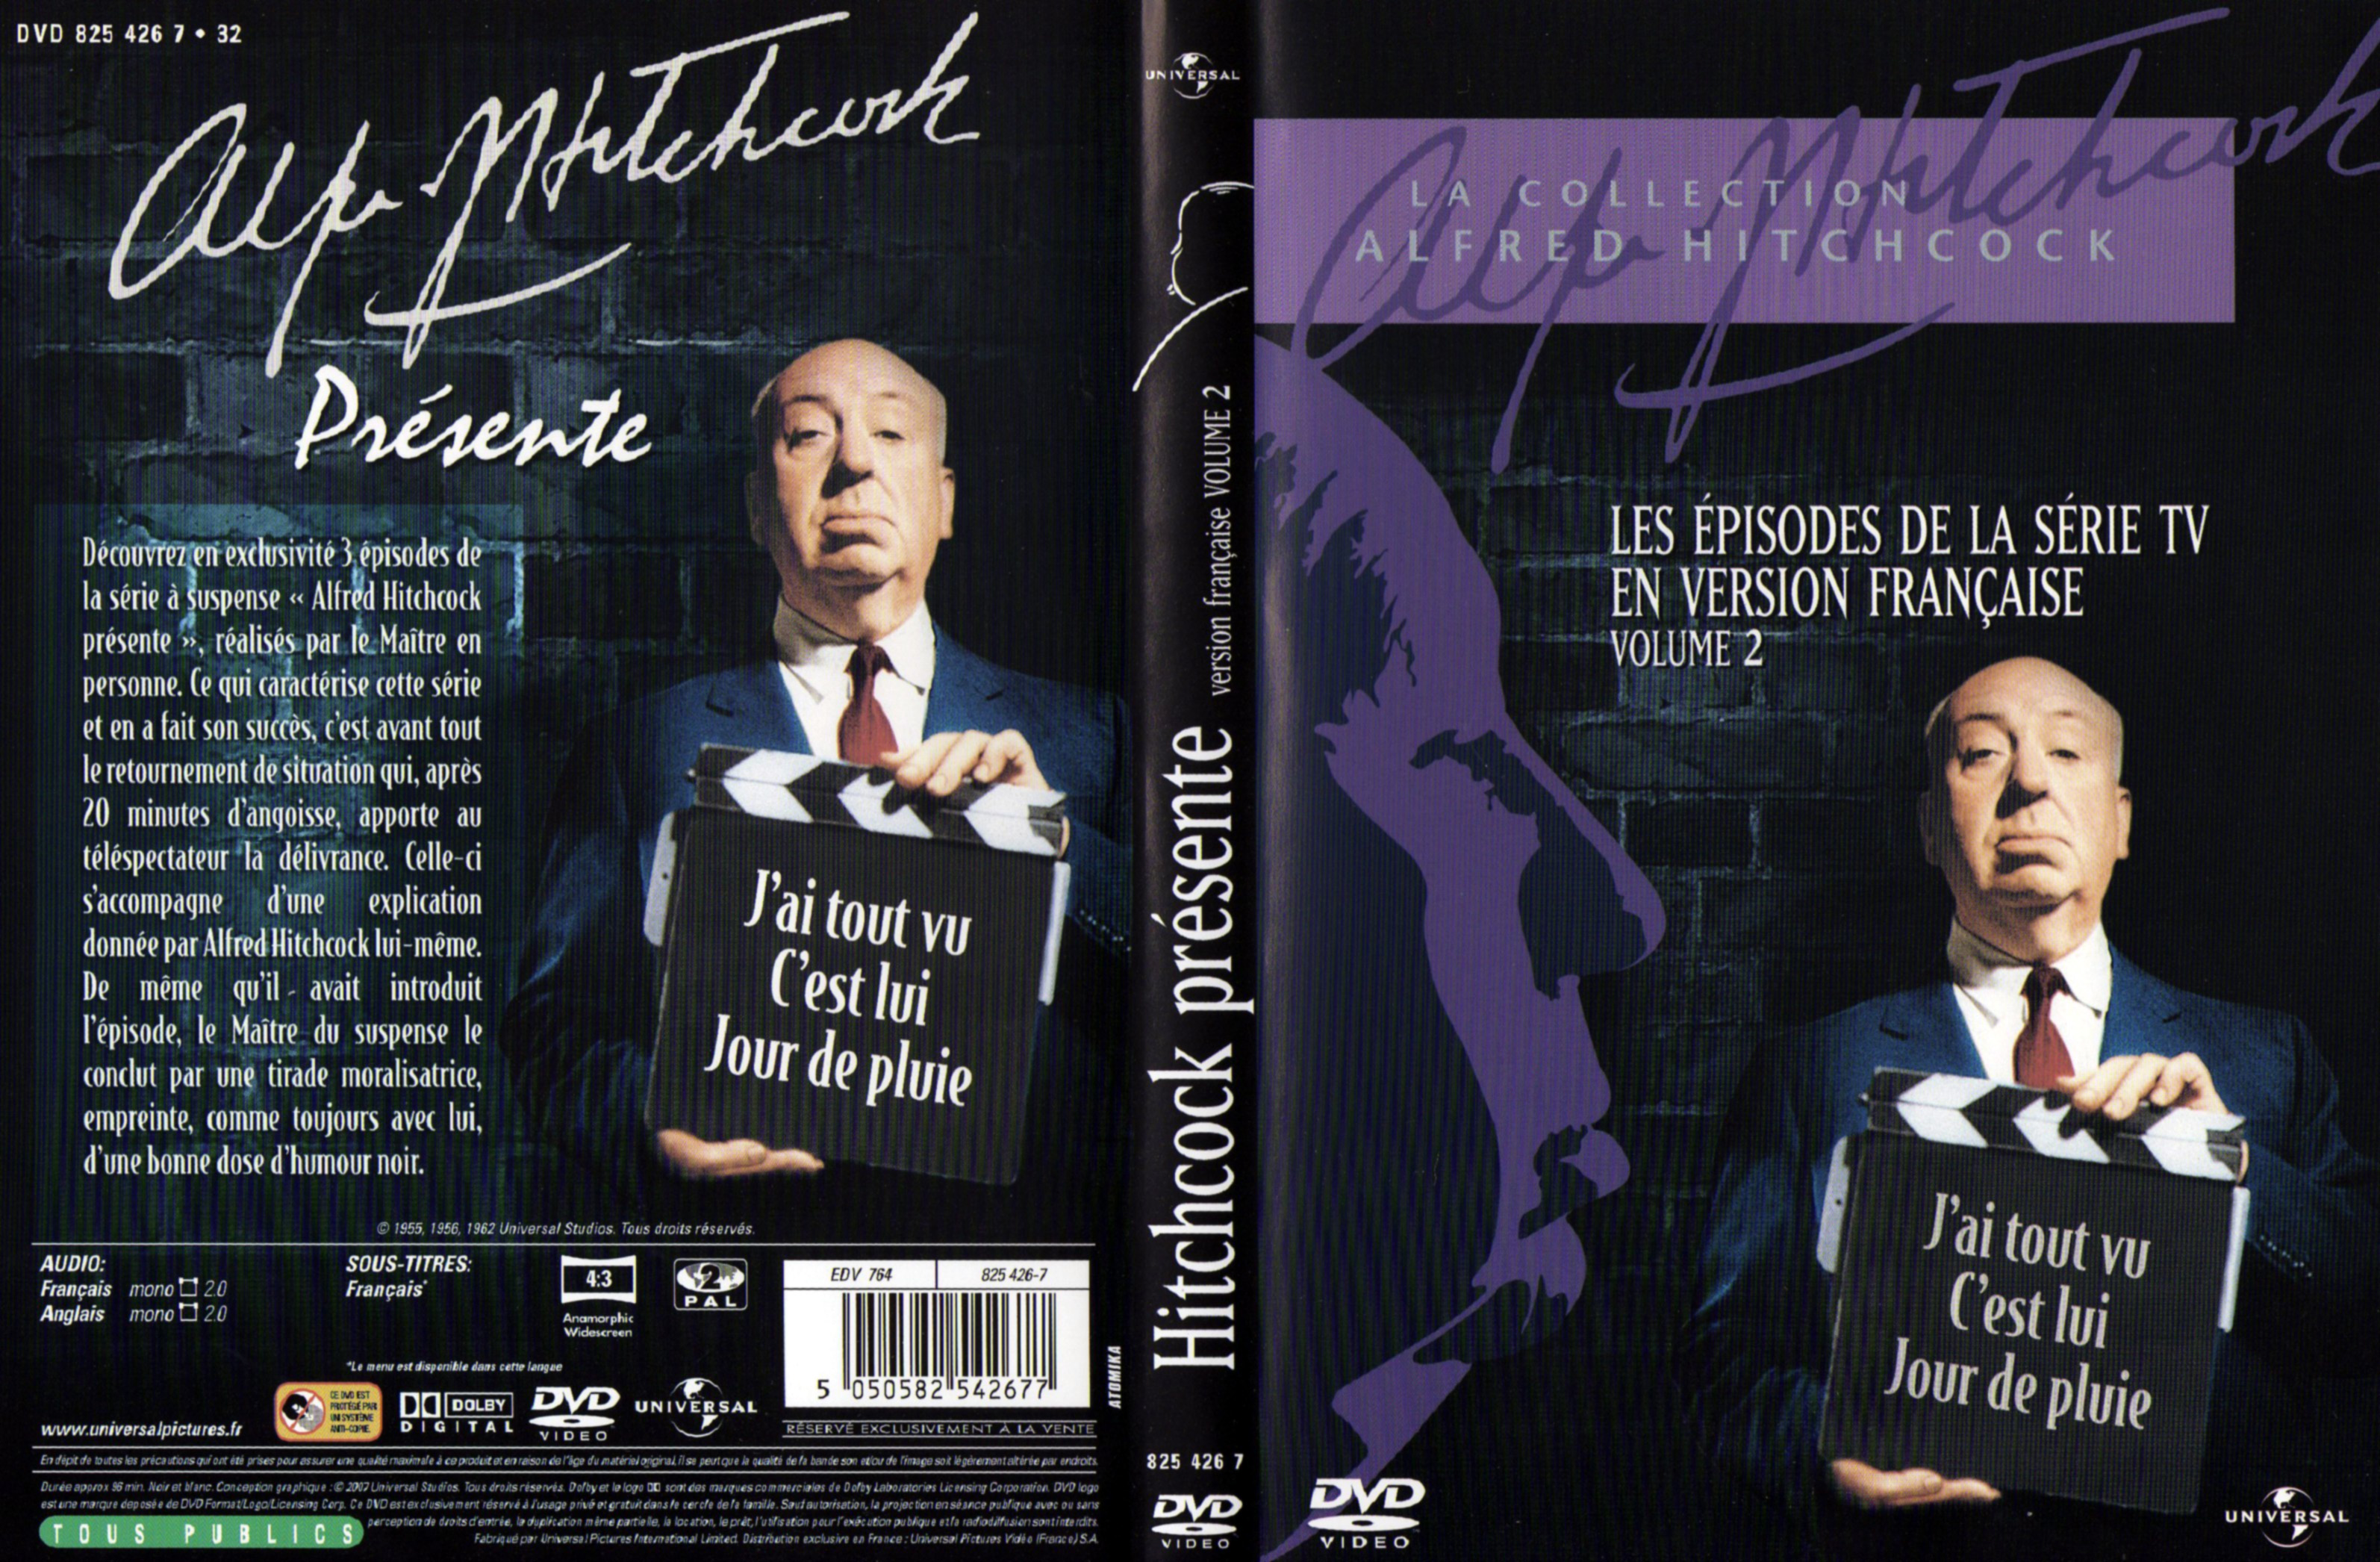 Jaquette DVD Hitchcock prsente vol 02